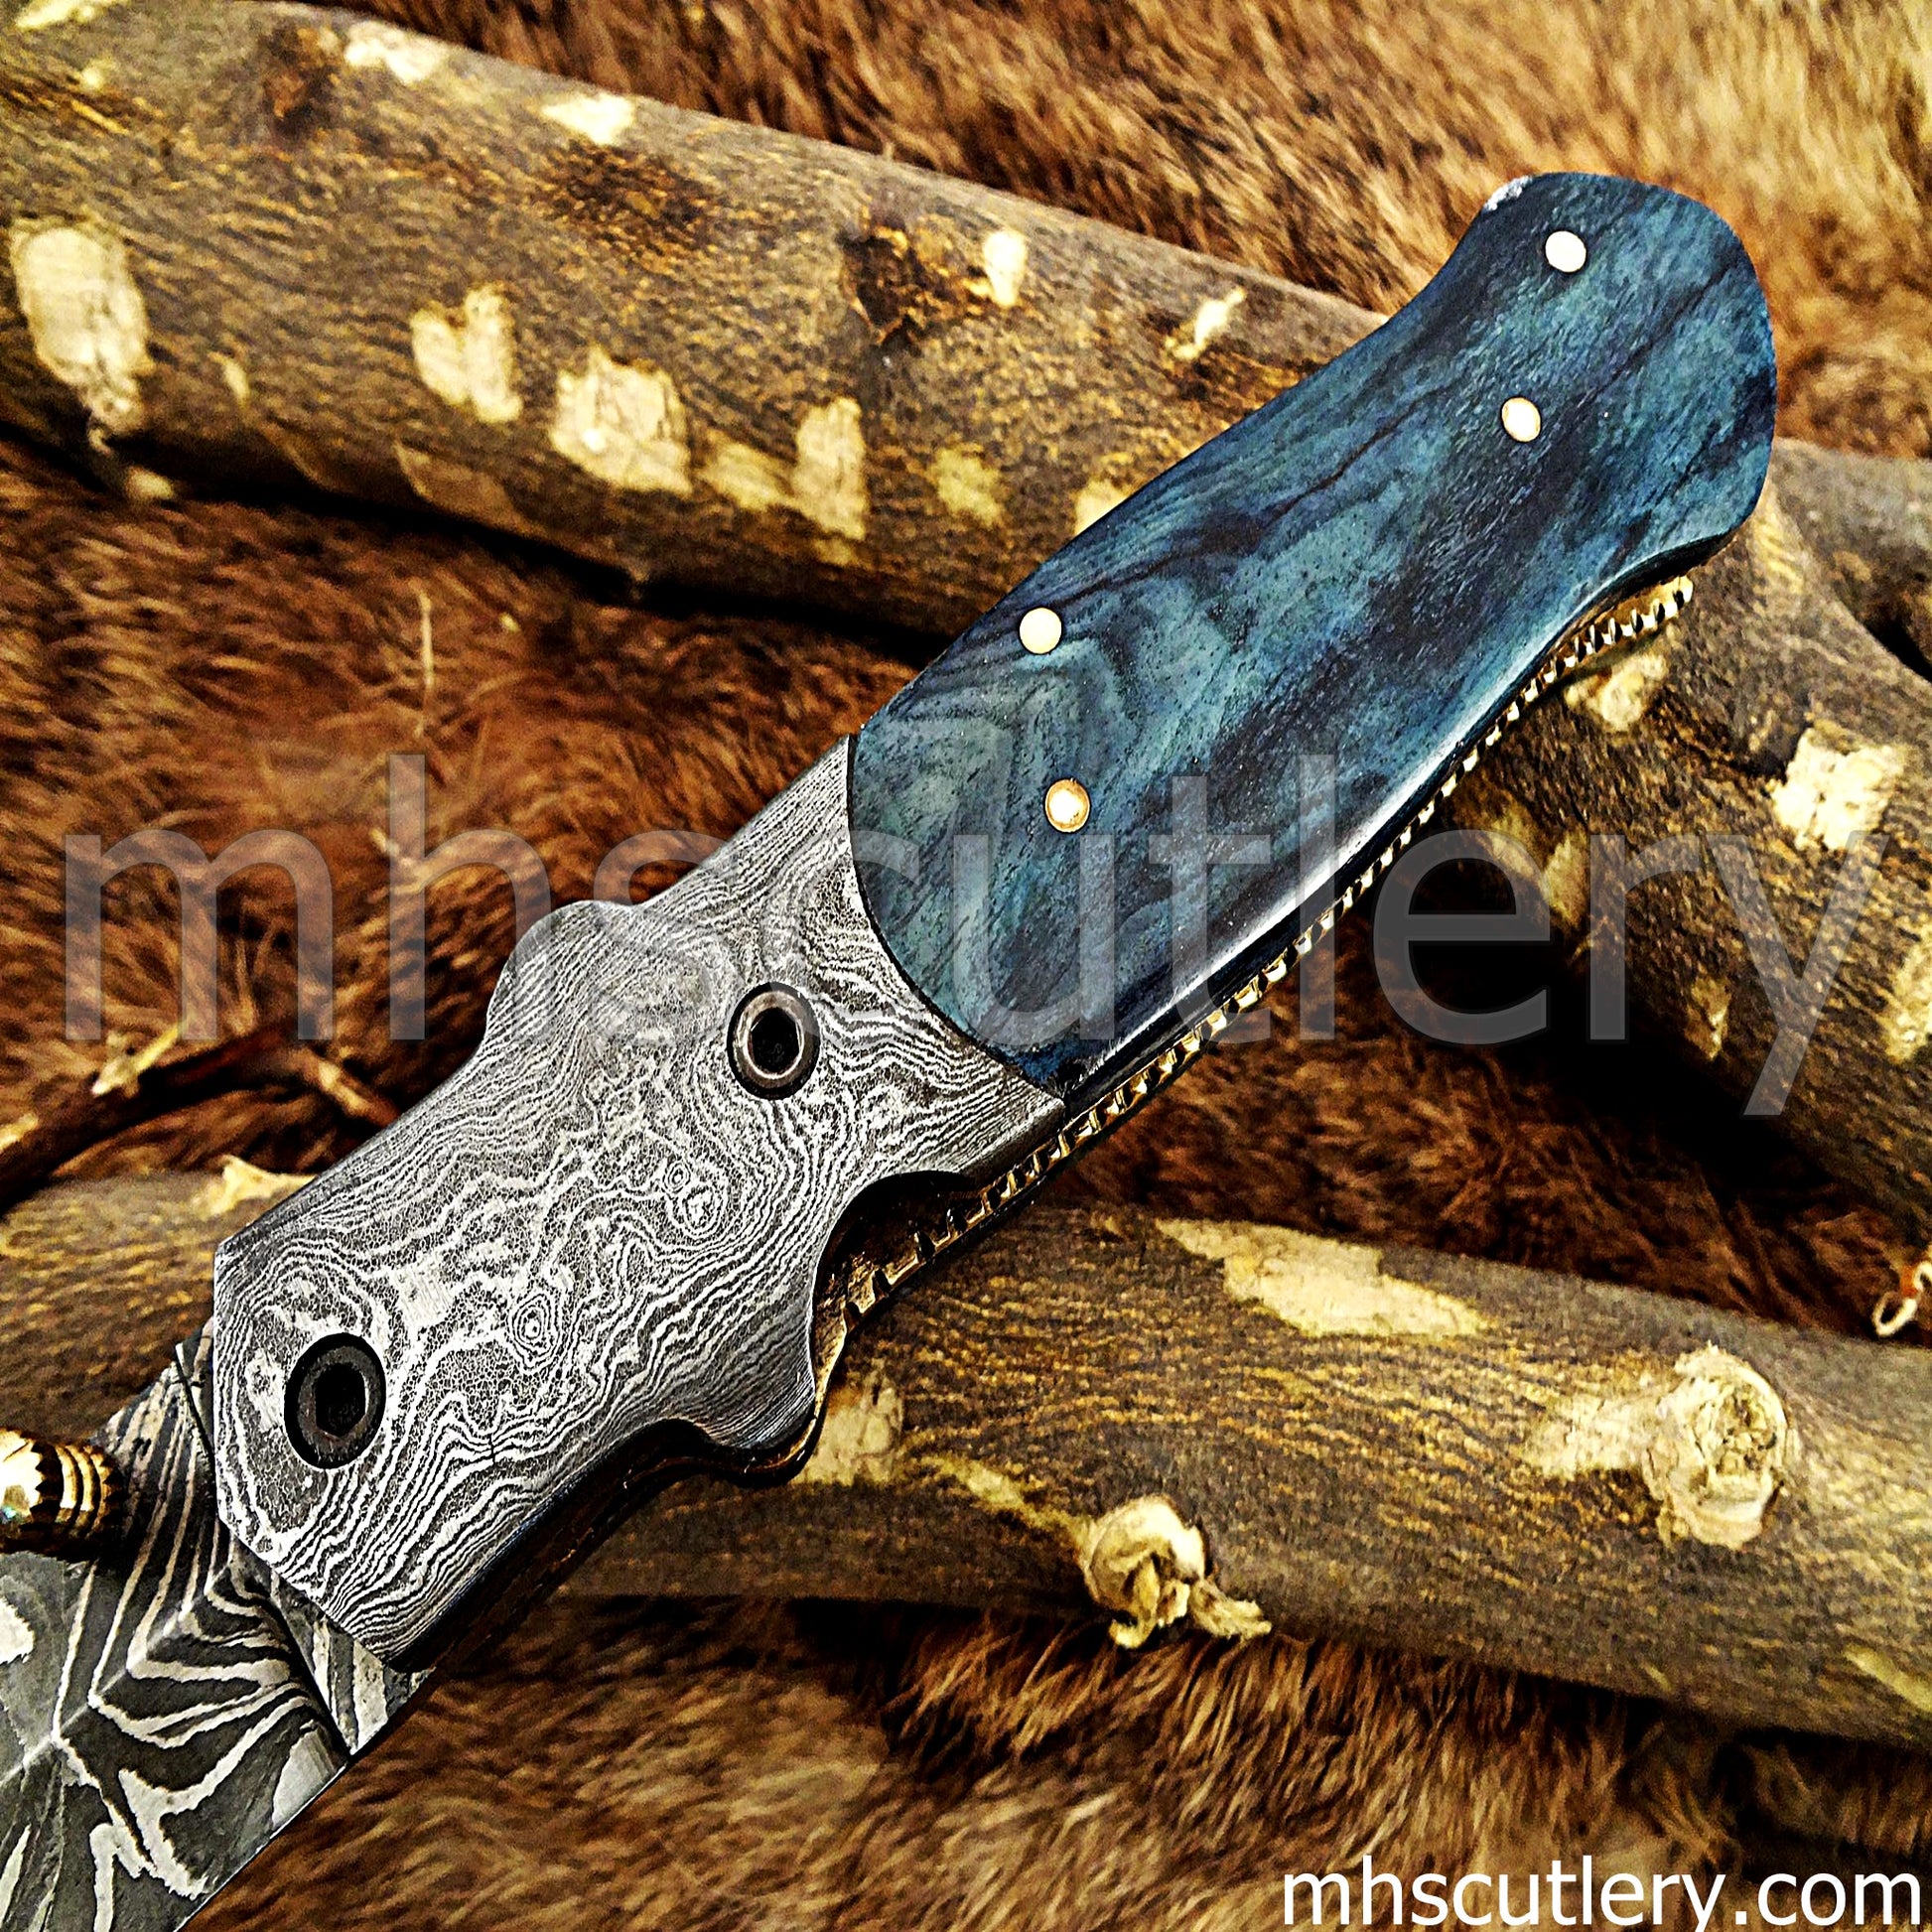 Hand Forged Damascus Steel Dagger Pocket Knife | mhscutlery